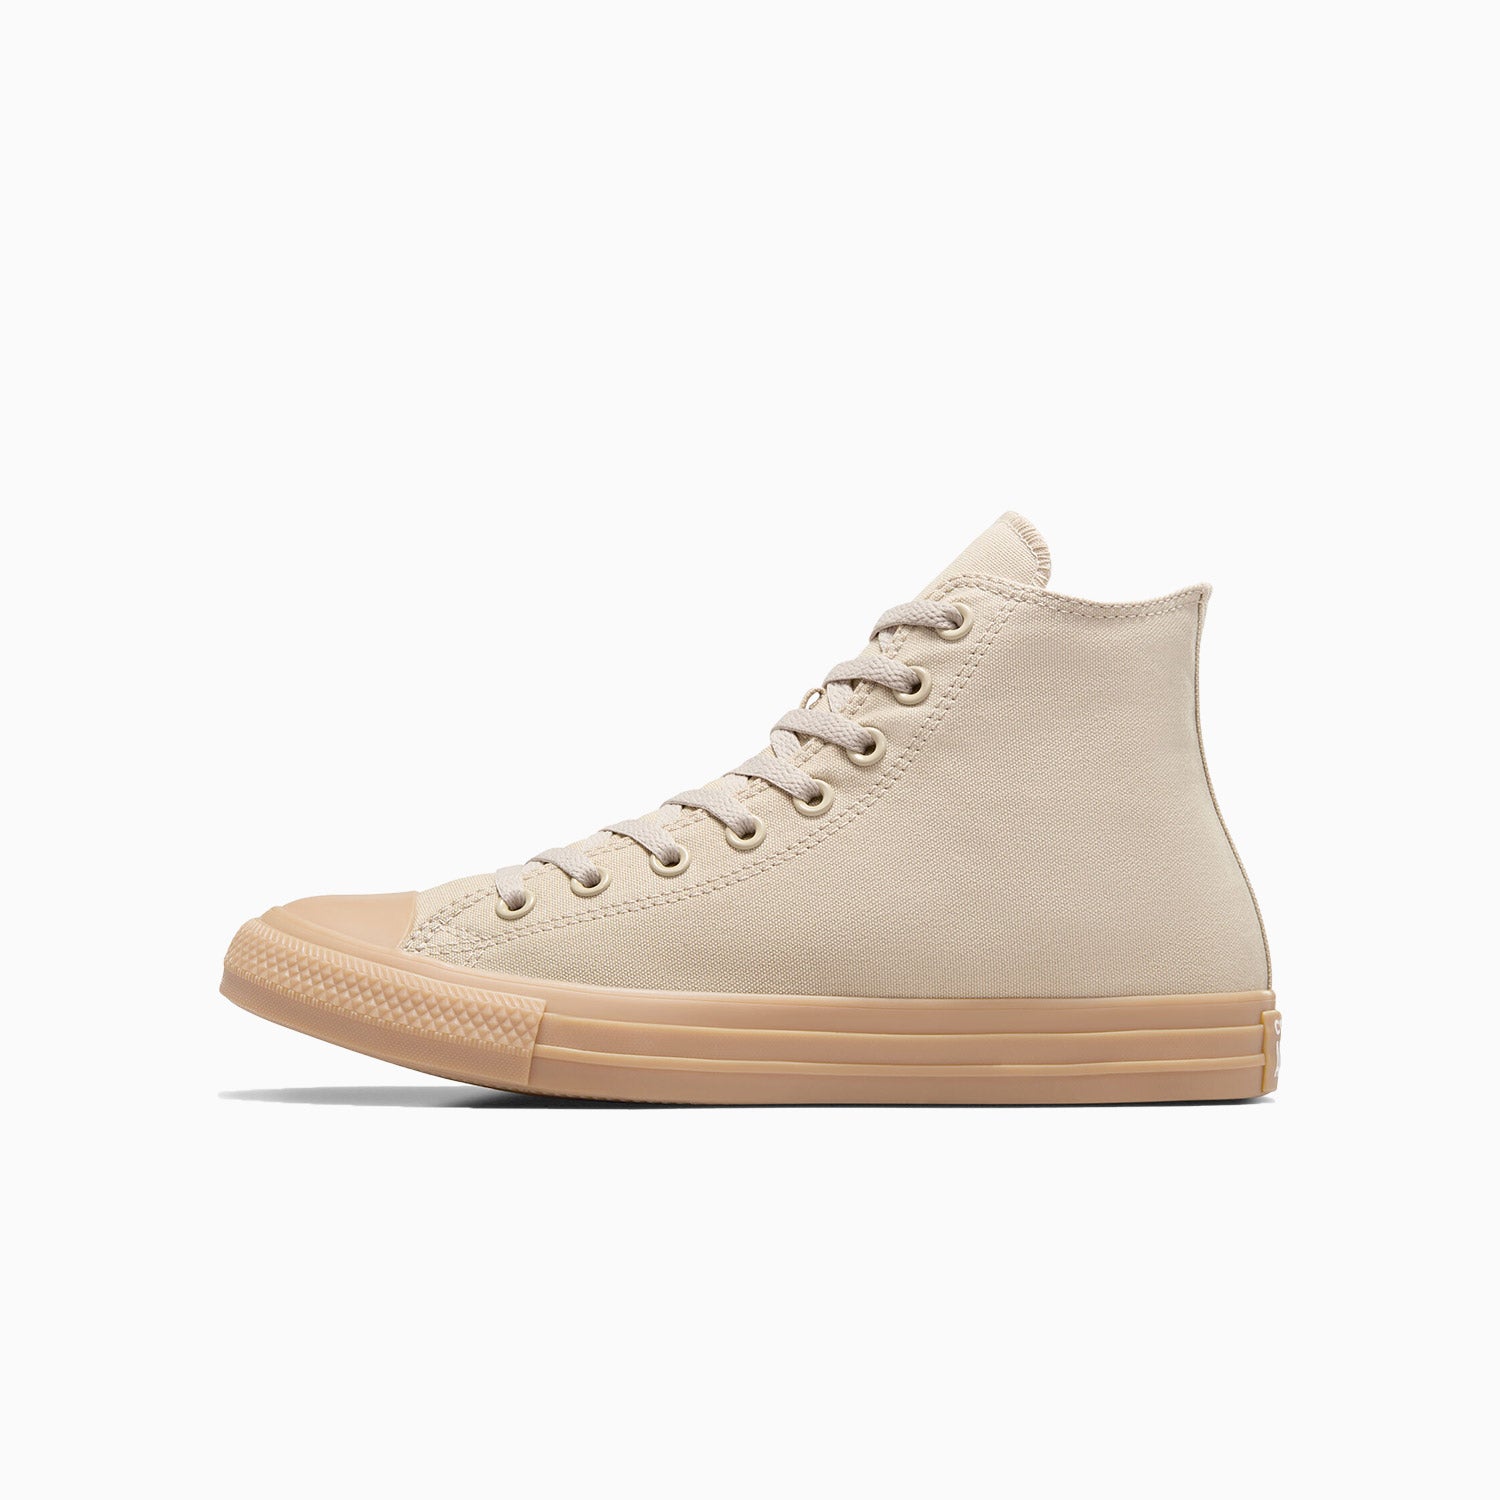 converse-chuck-taylor-all-star-monochrome-shoes-a09824c